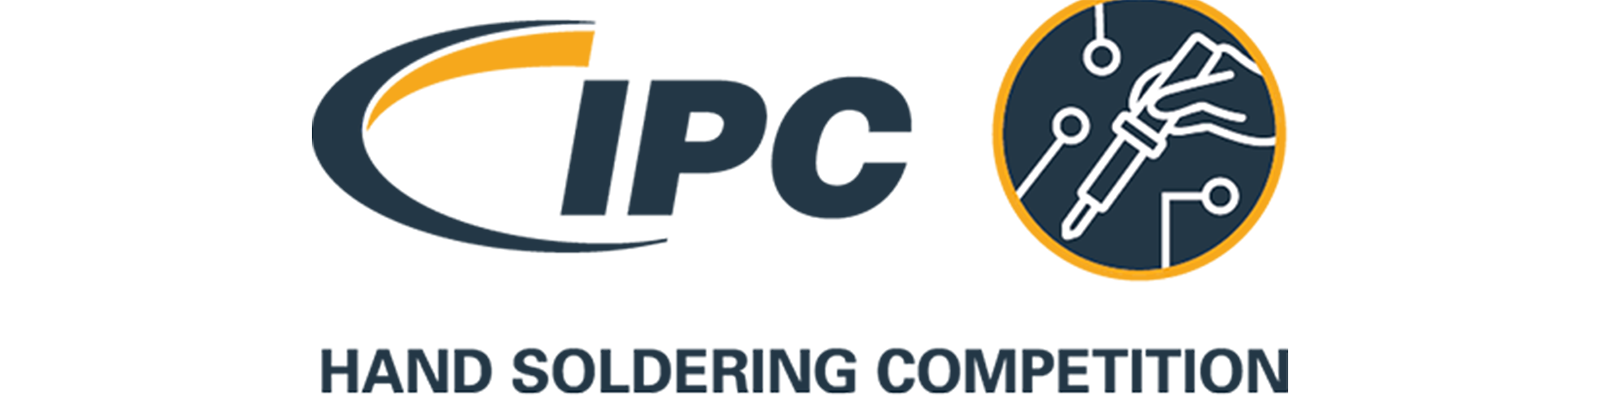 HSC Logo 1600 x 400